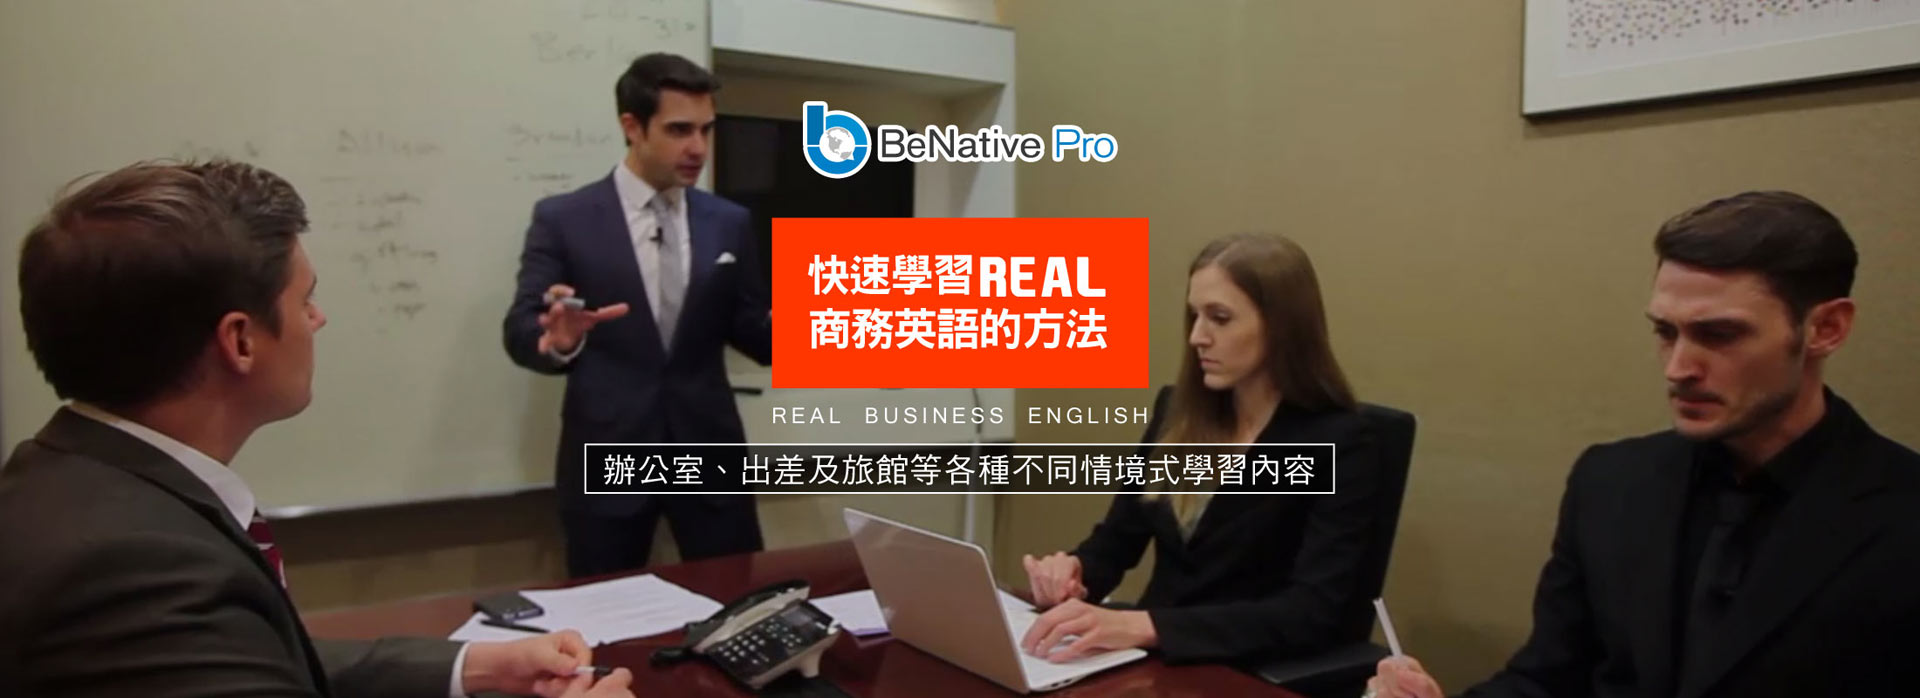 BeNative Pro 快速學習REAL 商務英語的方法